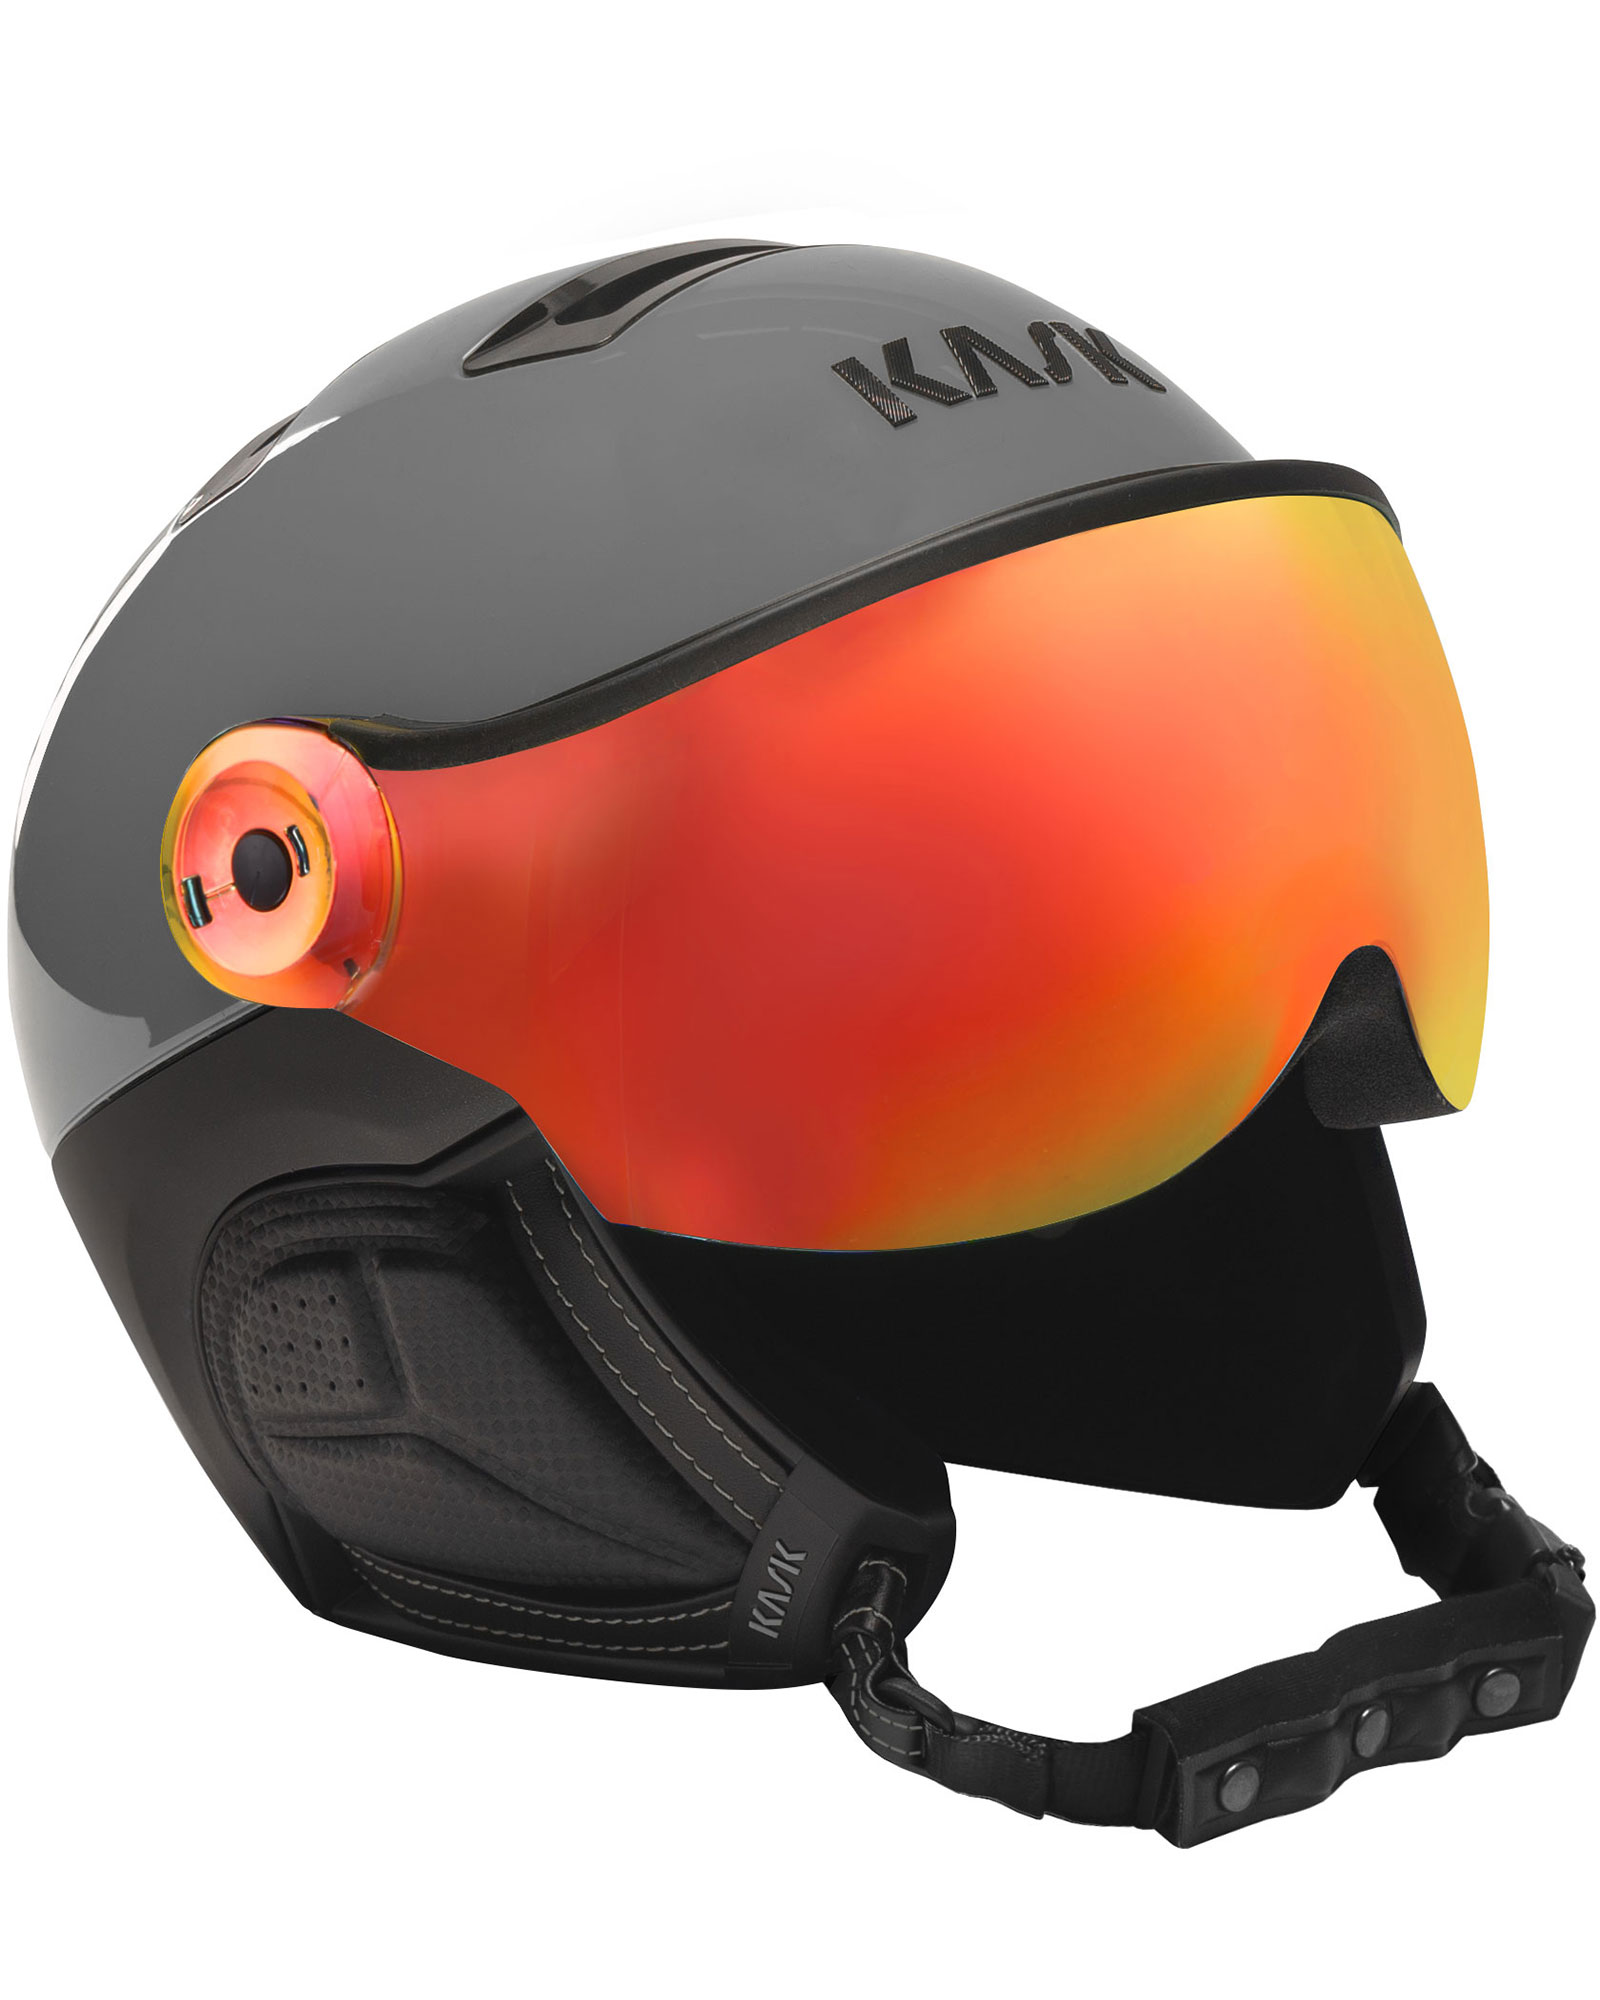 KASK Montecarlo Visor Helmet - Solid Grey - Red Mirror Visor S